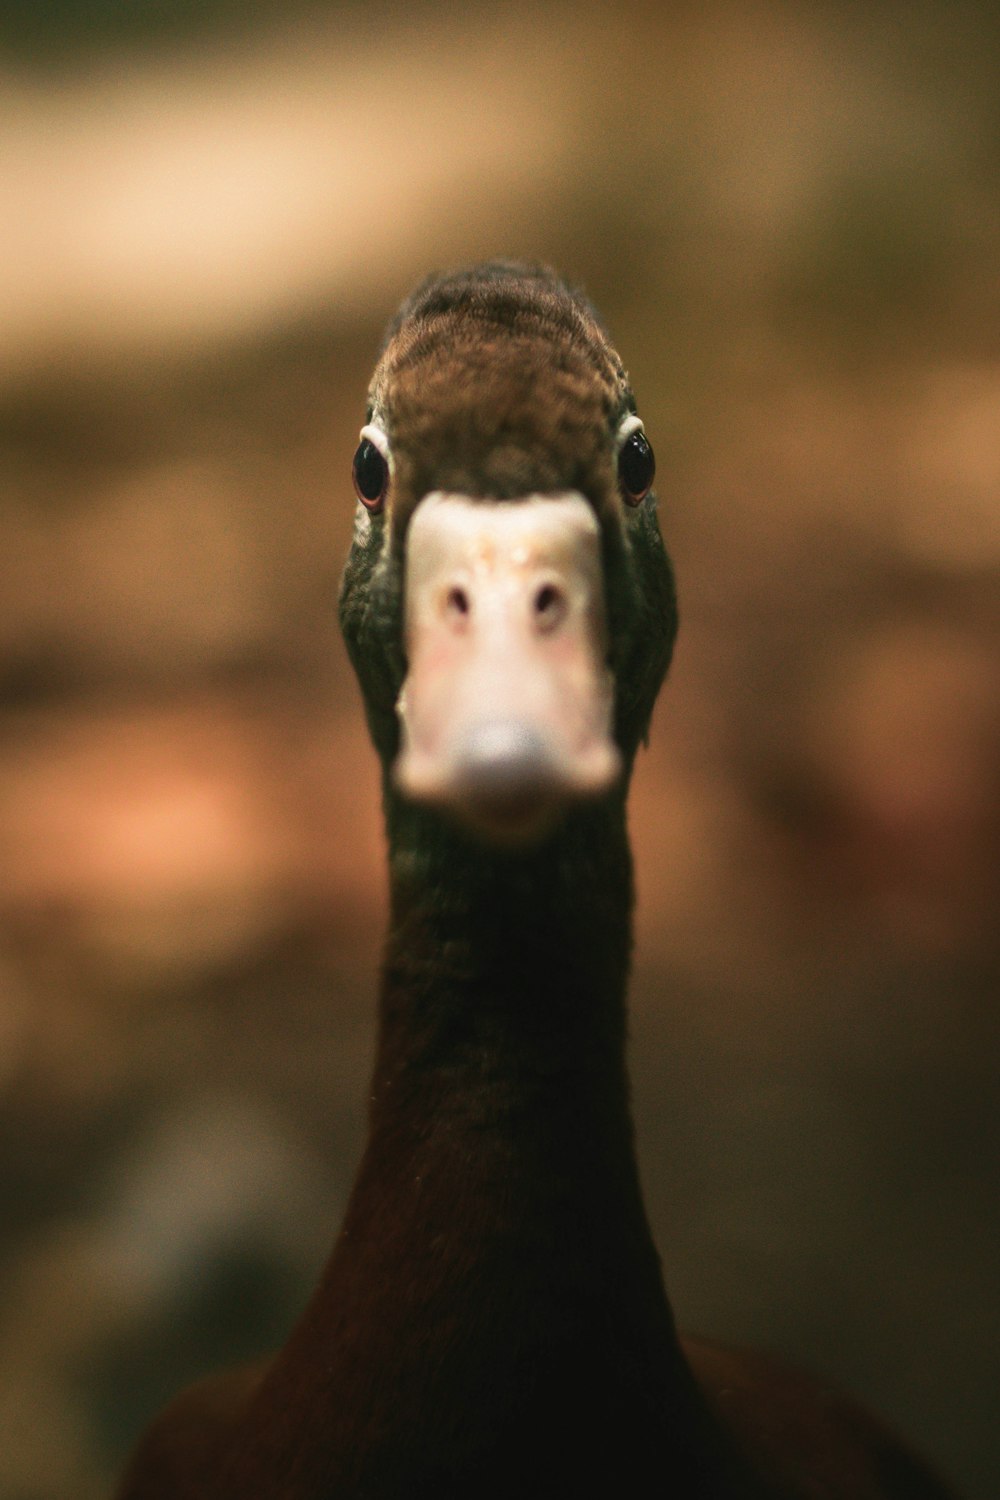 closeup photo of duck face